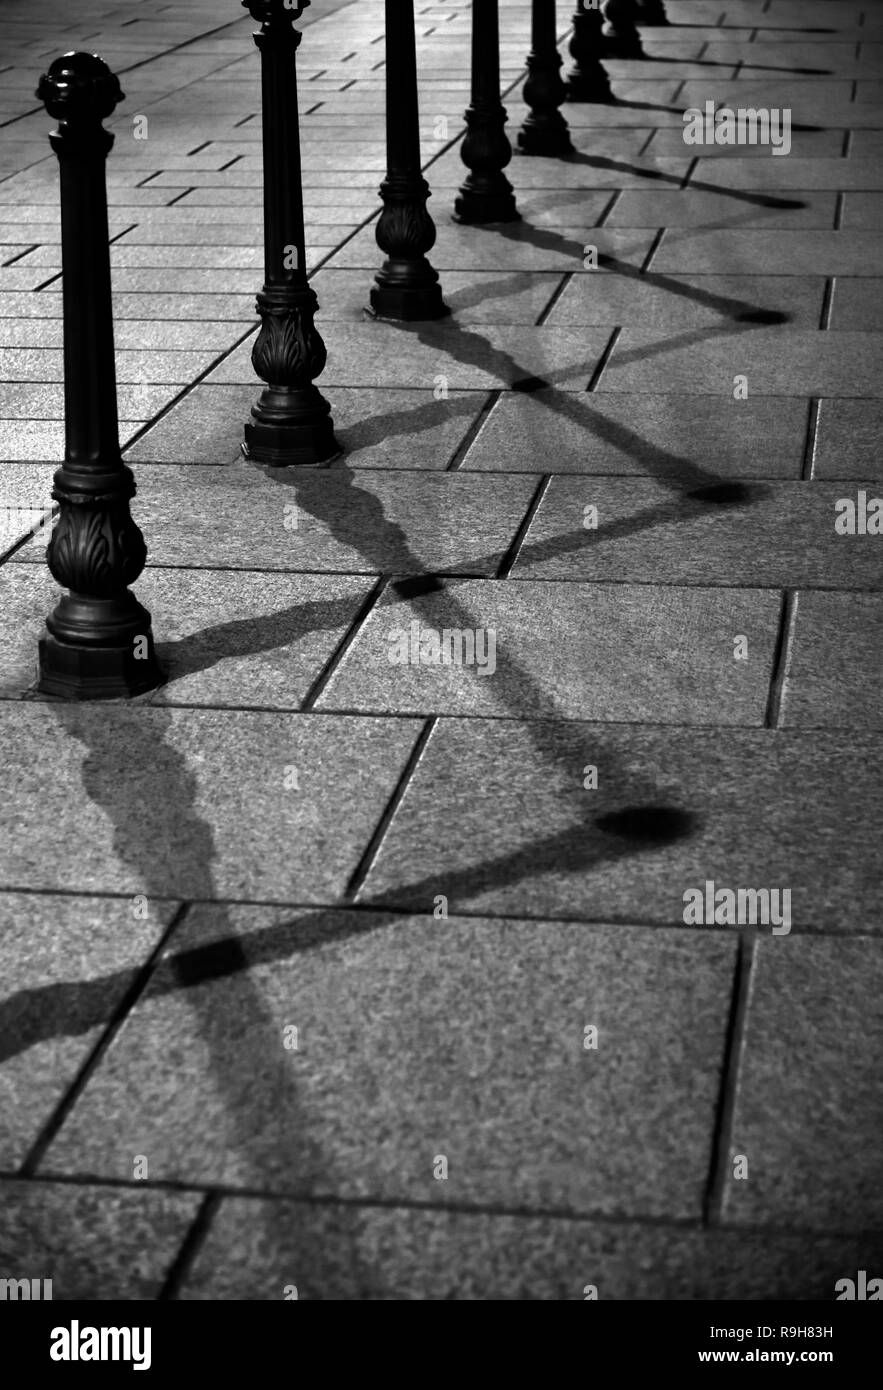 shadows on pavement Stock Photo